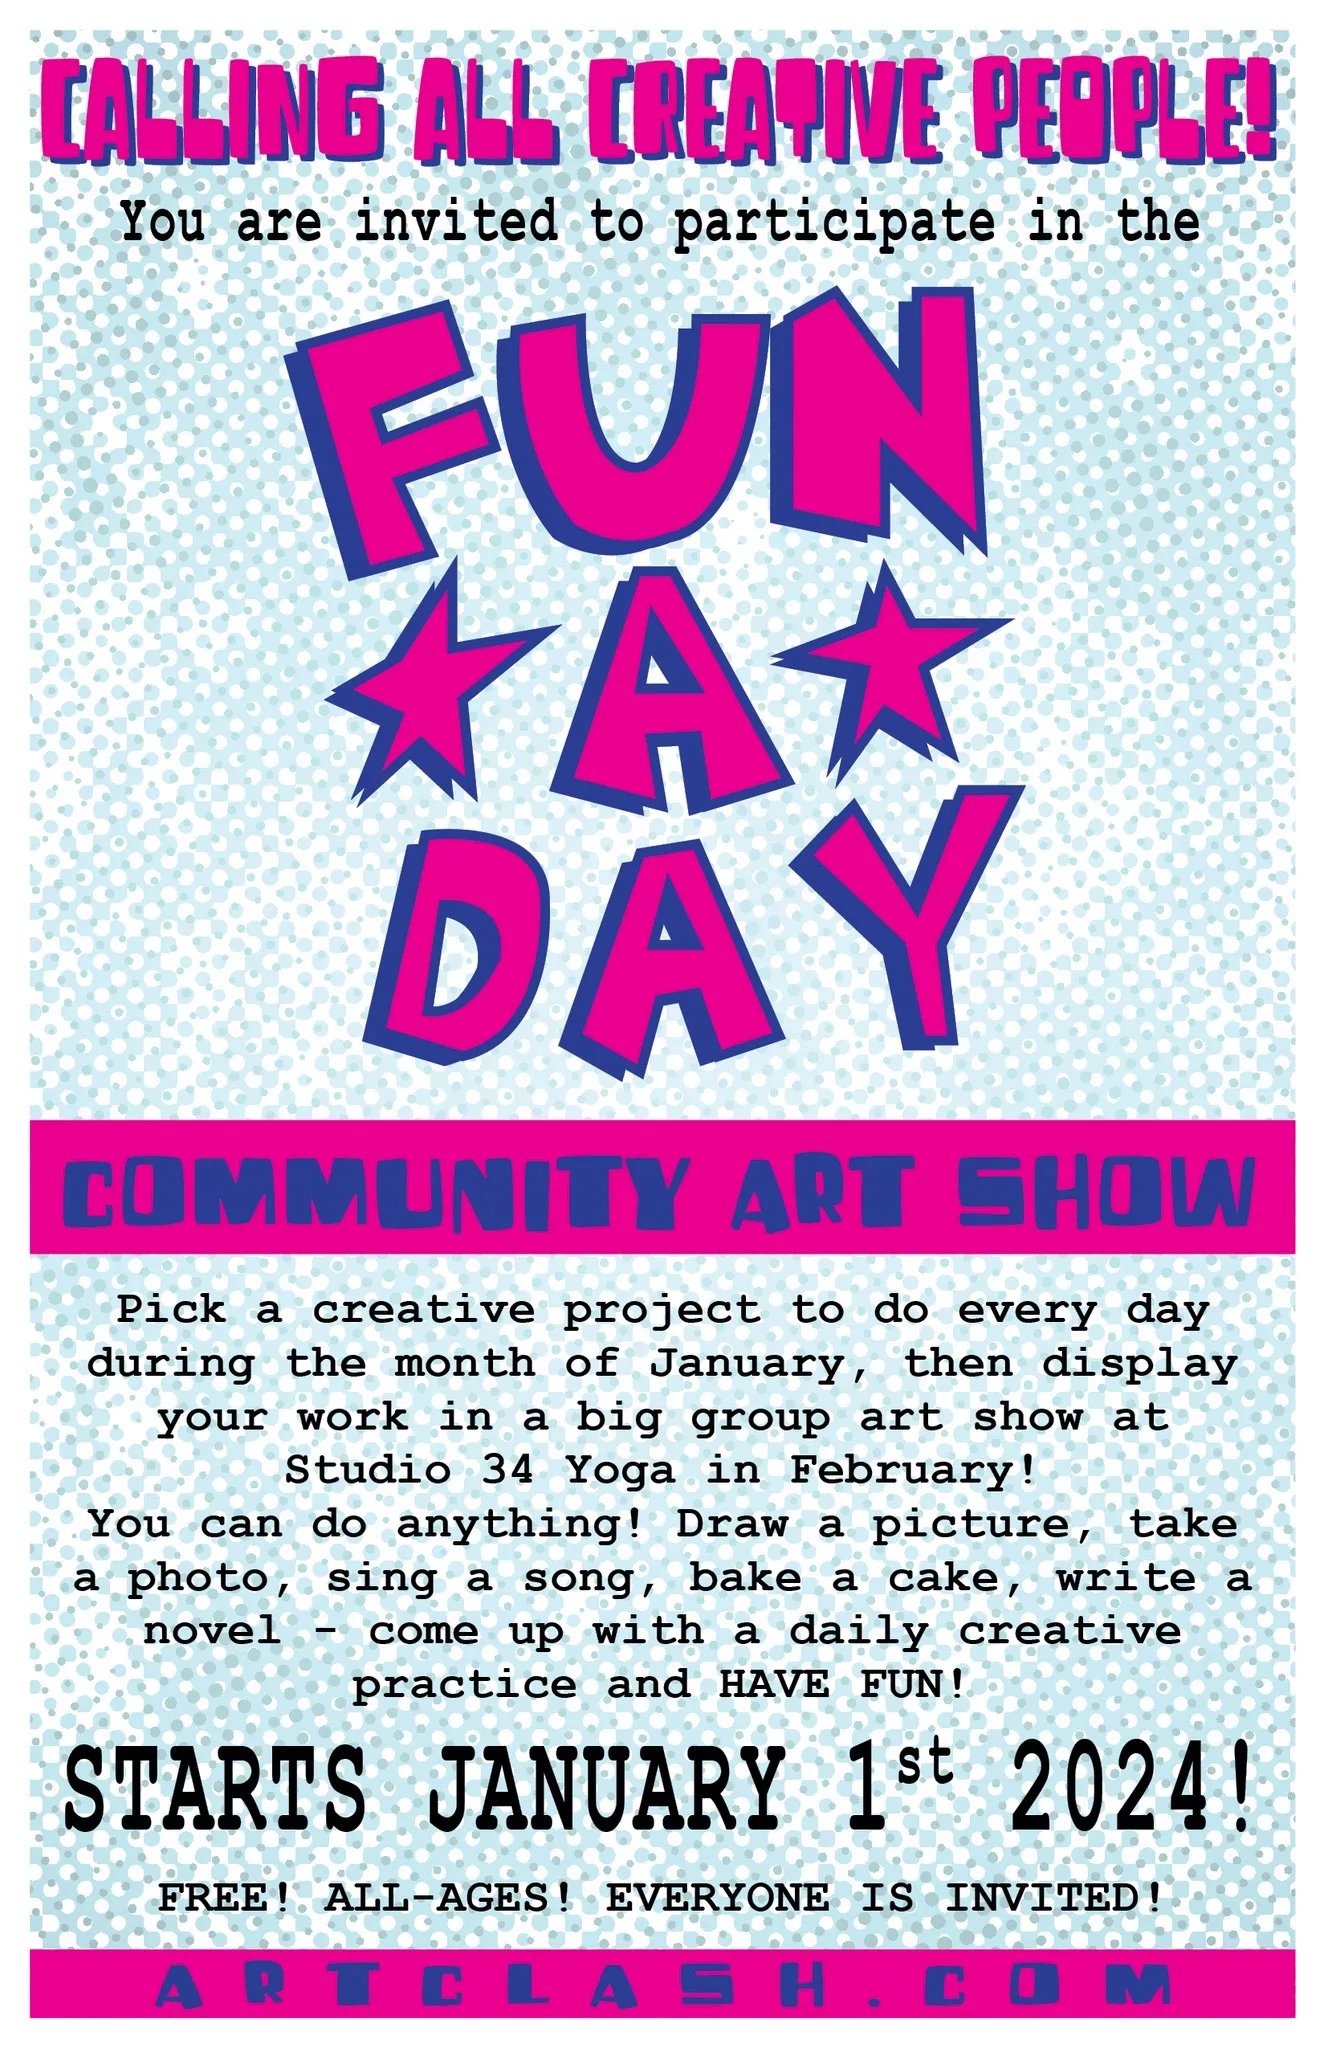 Fun-A-Day-Community-Art